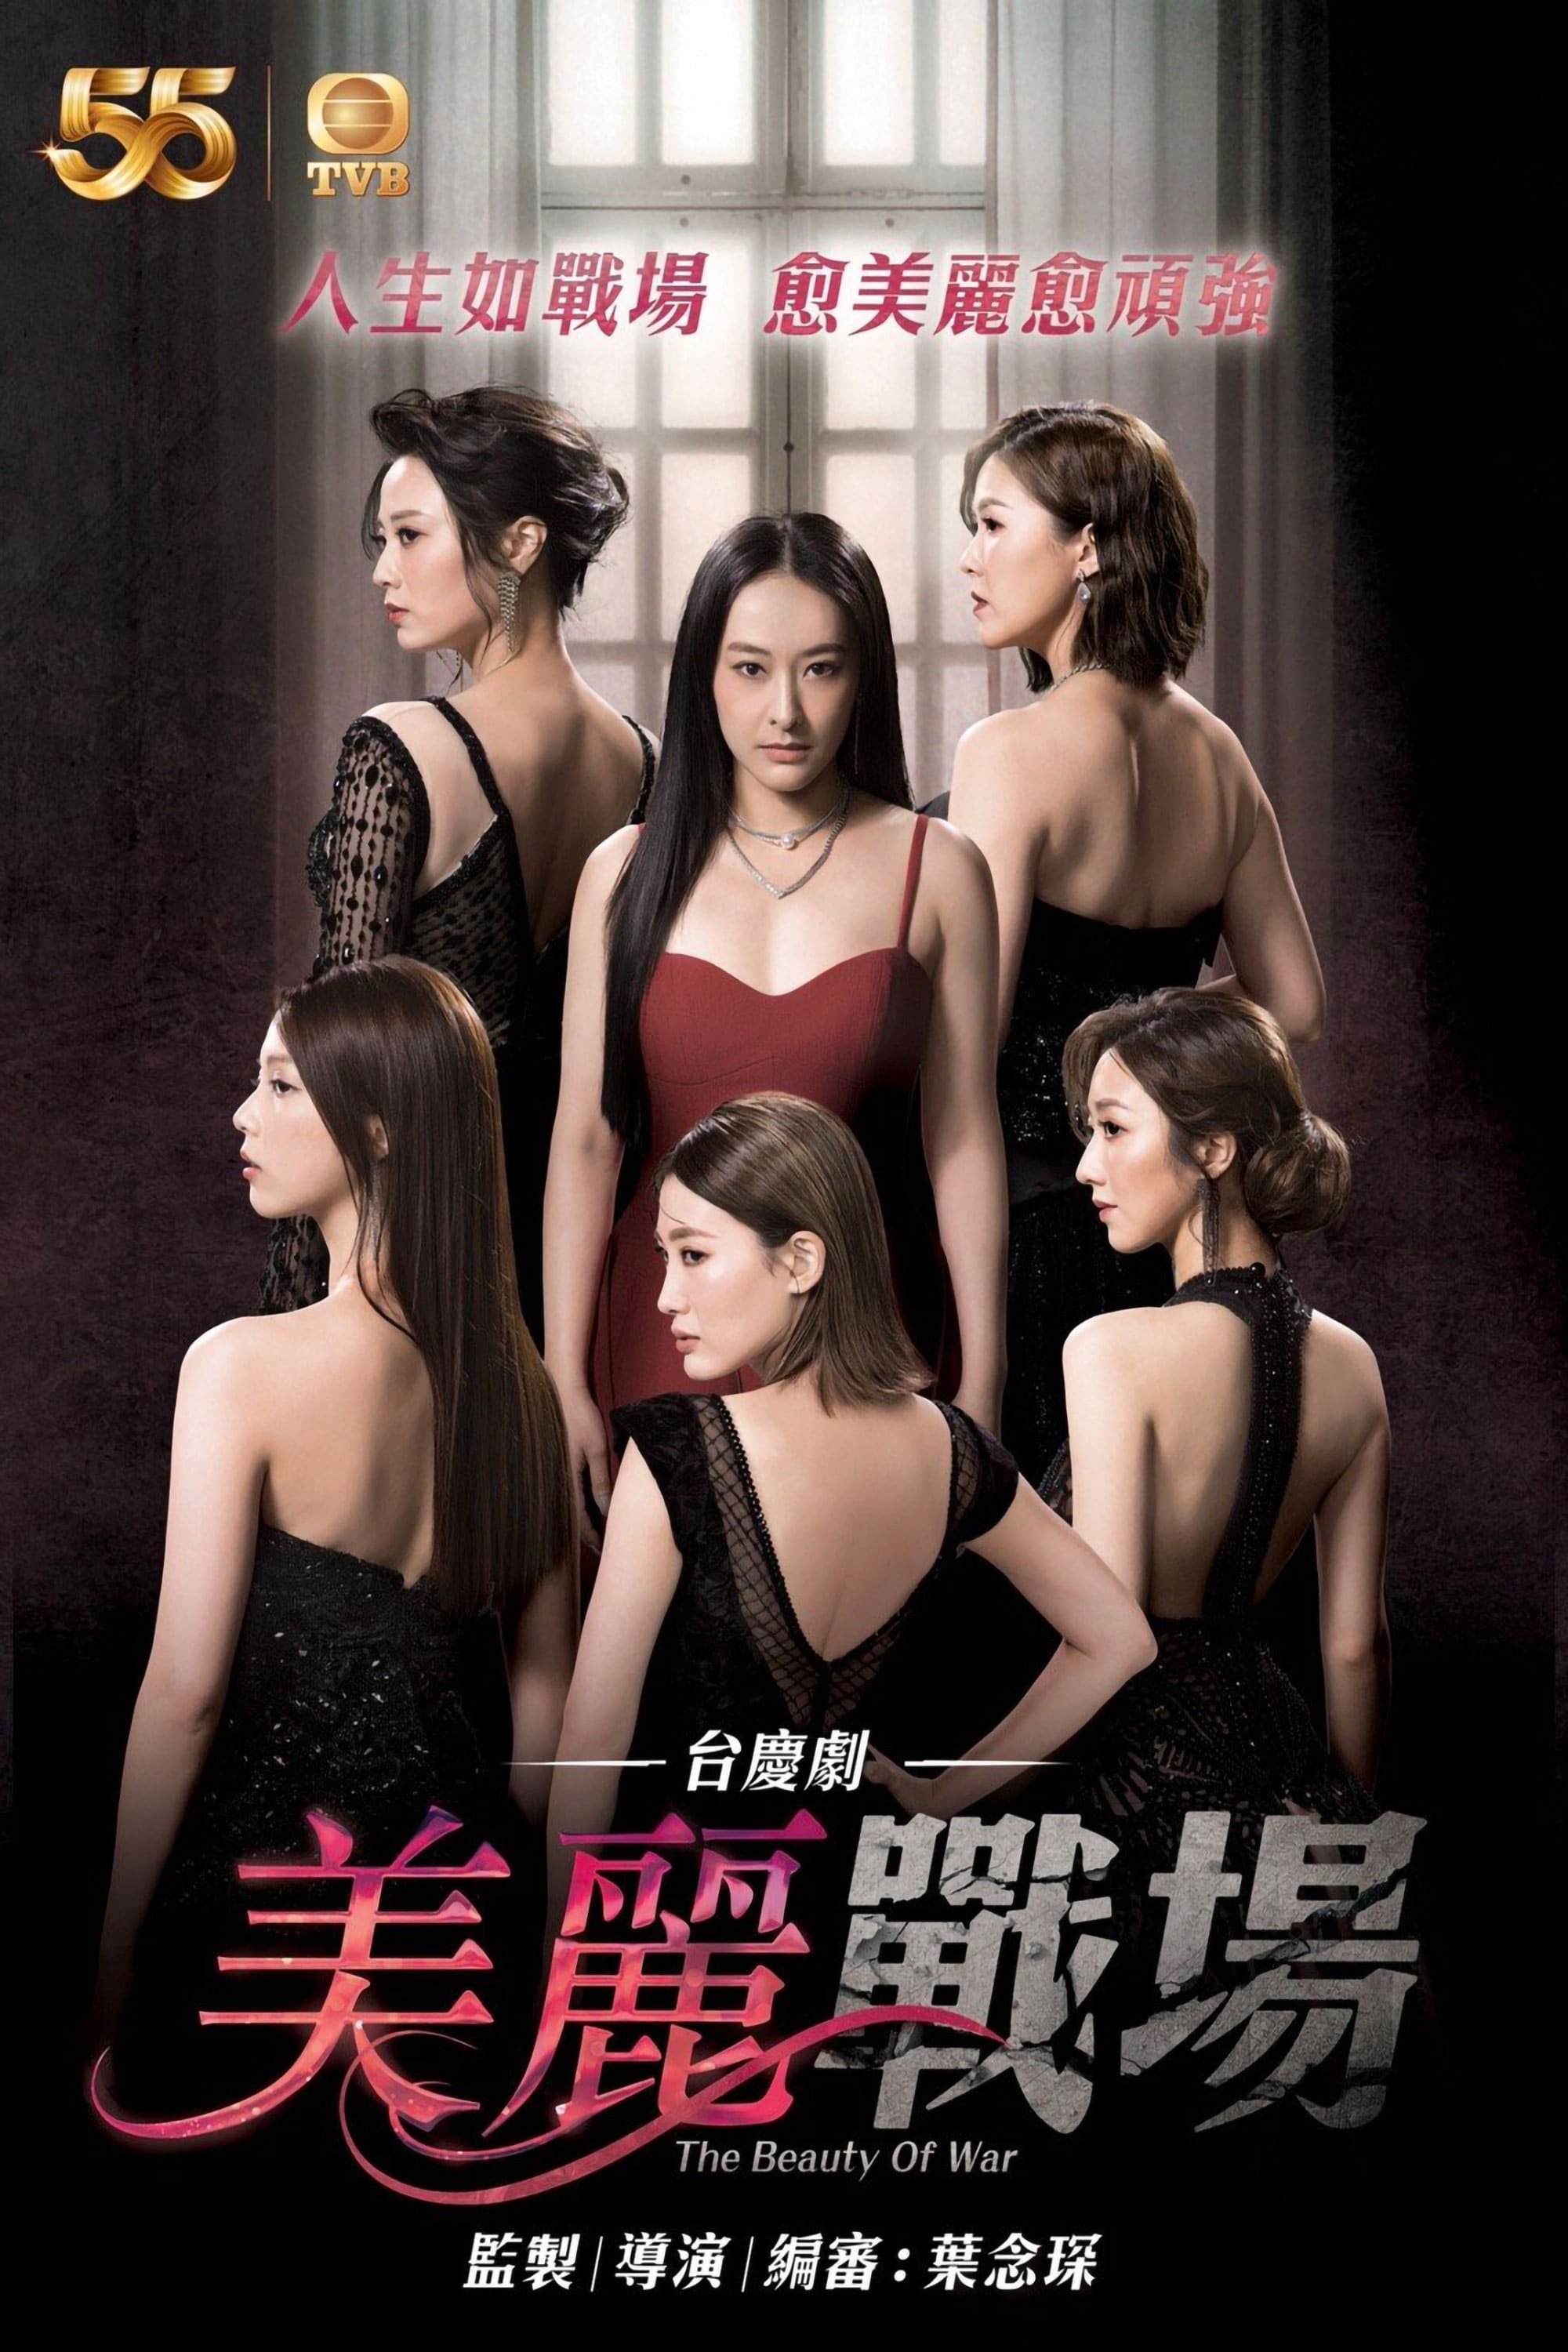 TV ratings for The War Of Beauties (美麗戰場) in Canada. TVB Jade TV series